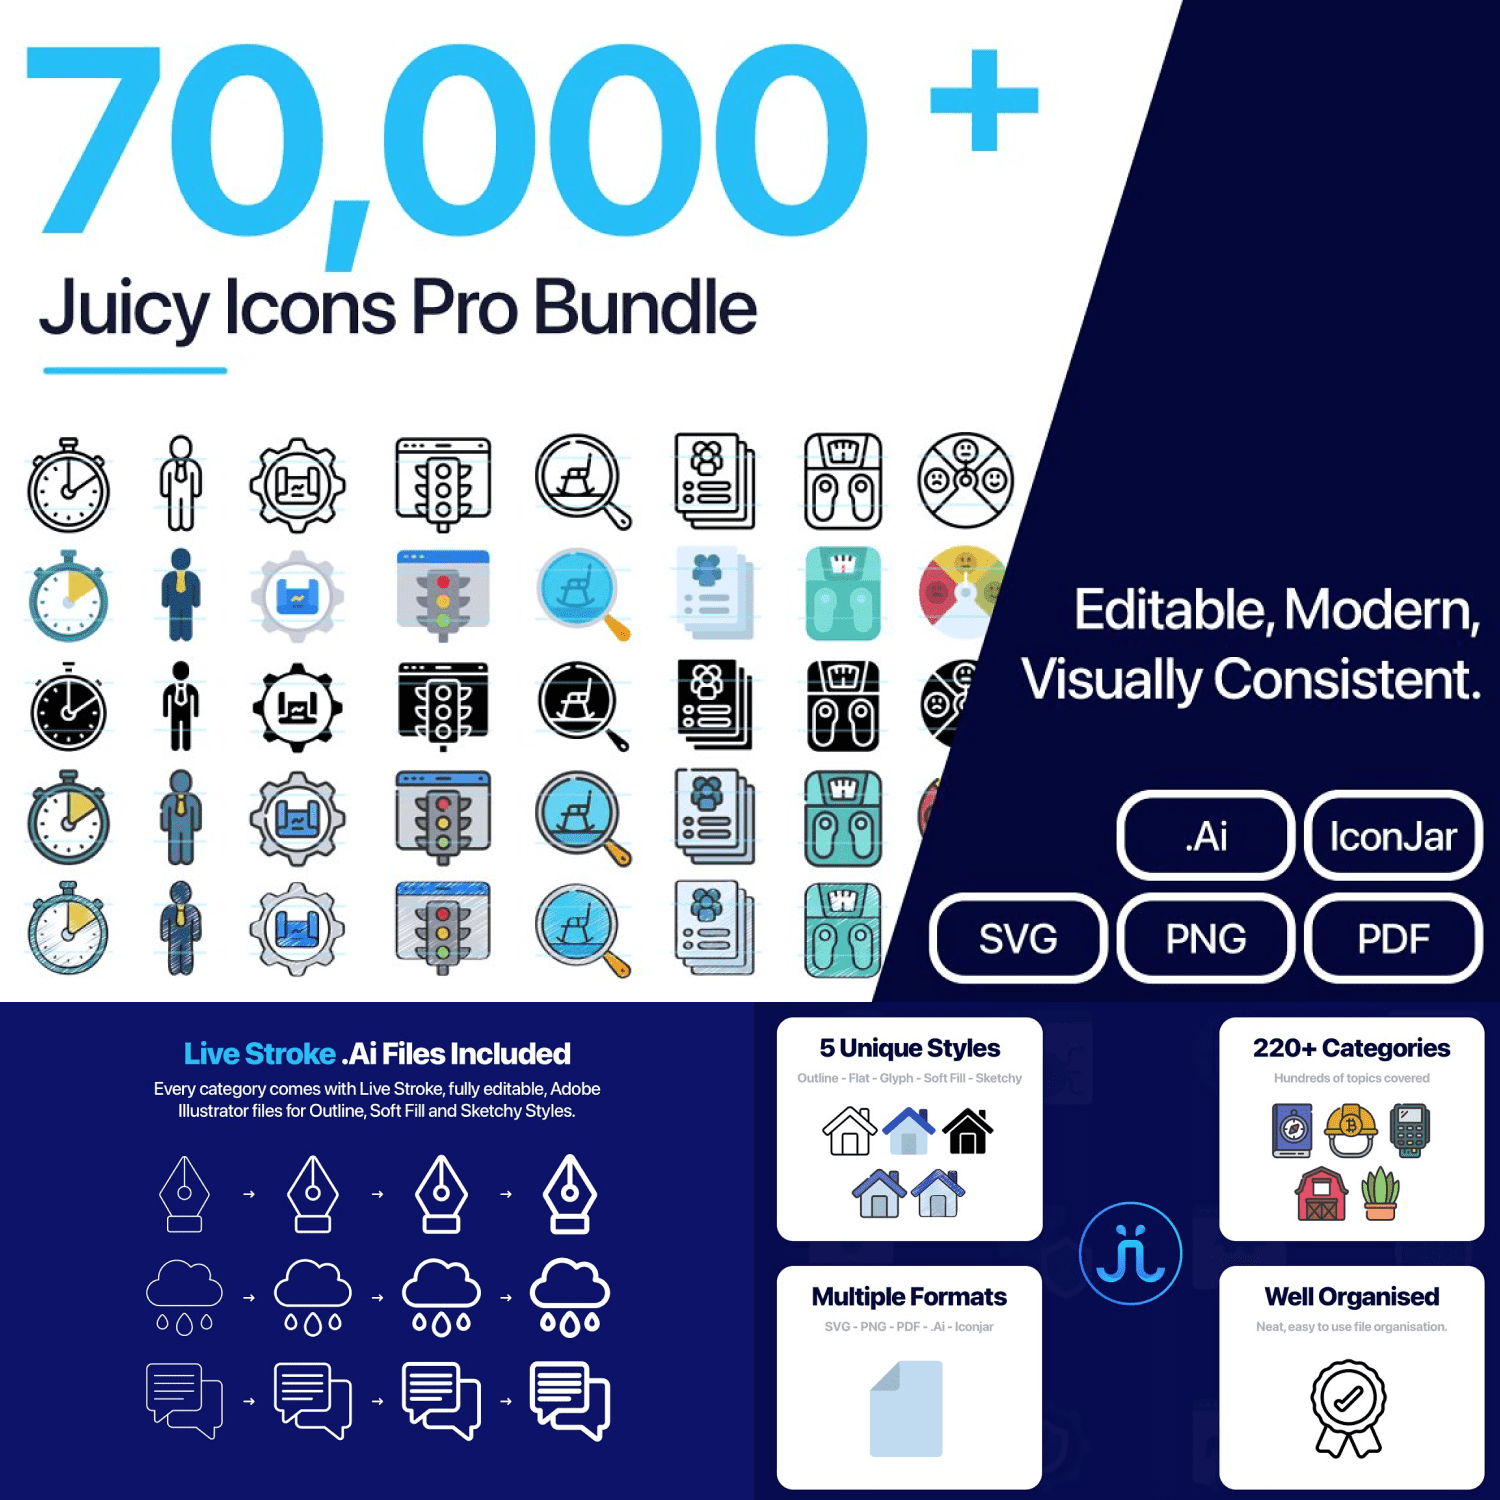 70000 juicy icons pro bundle - main image preview.